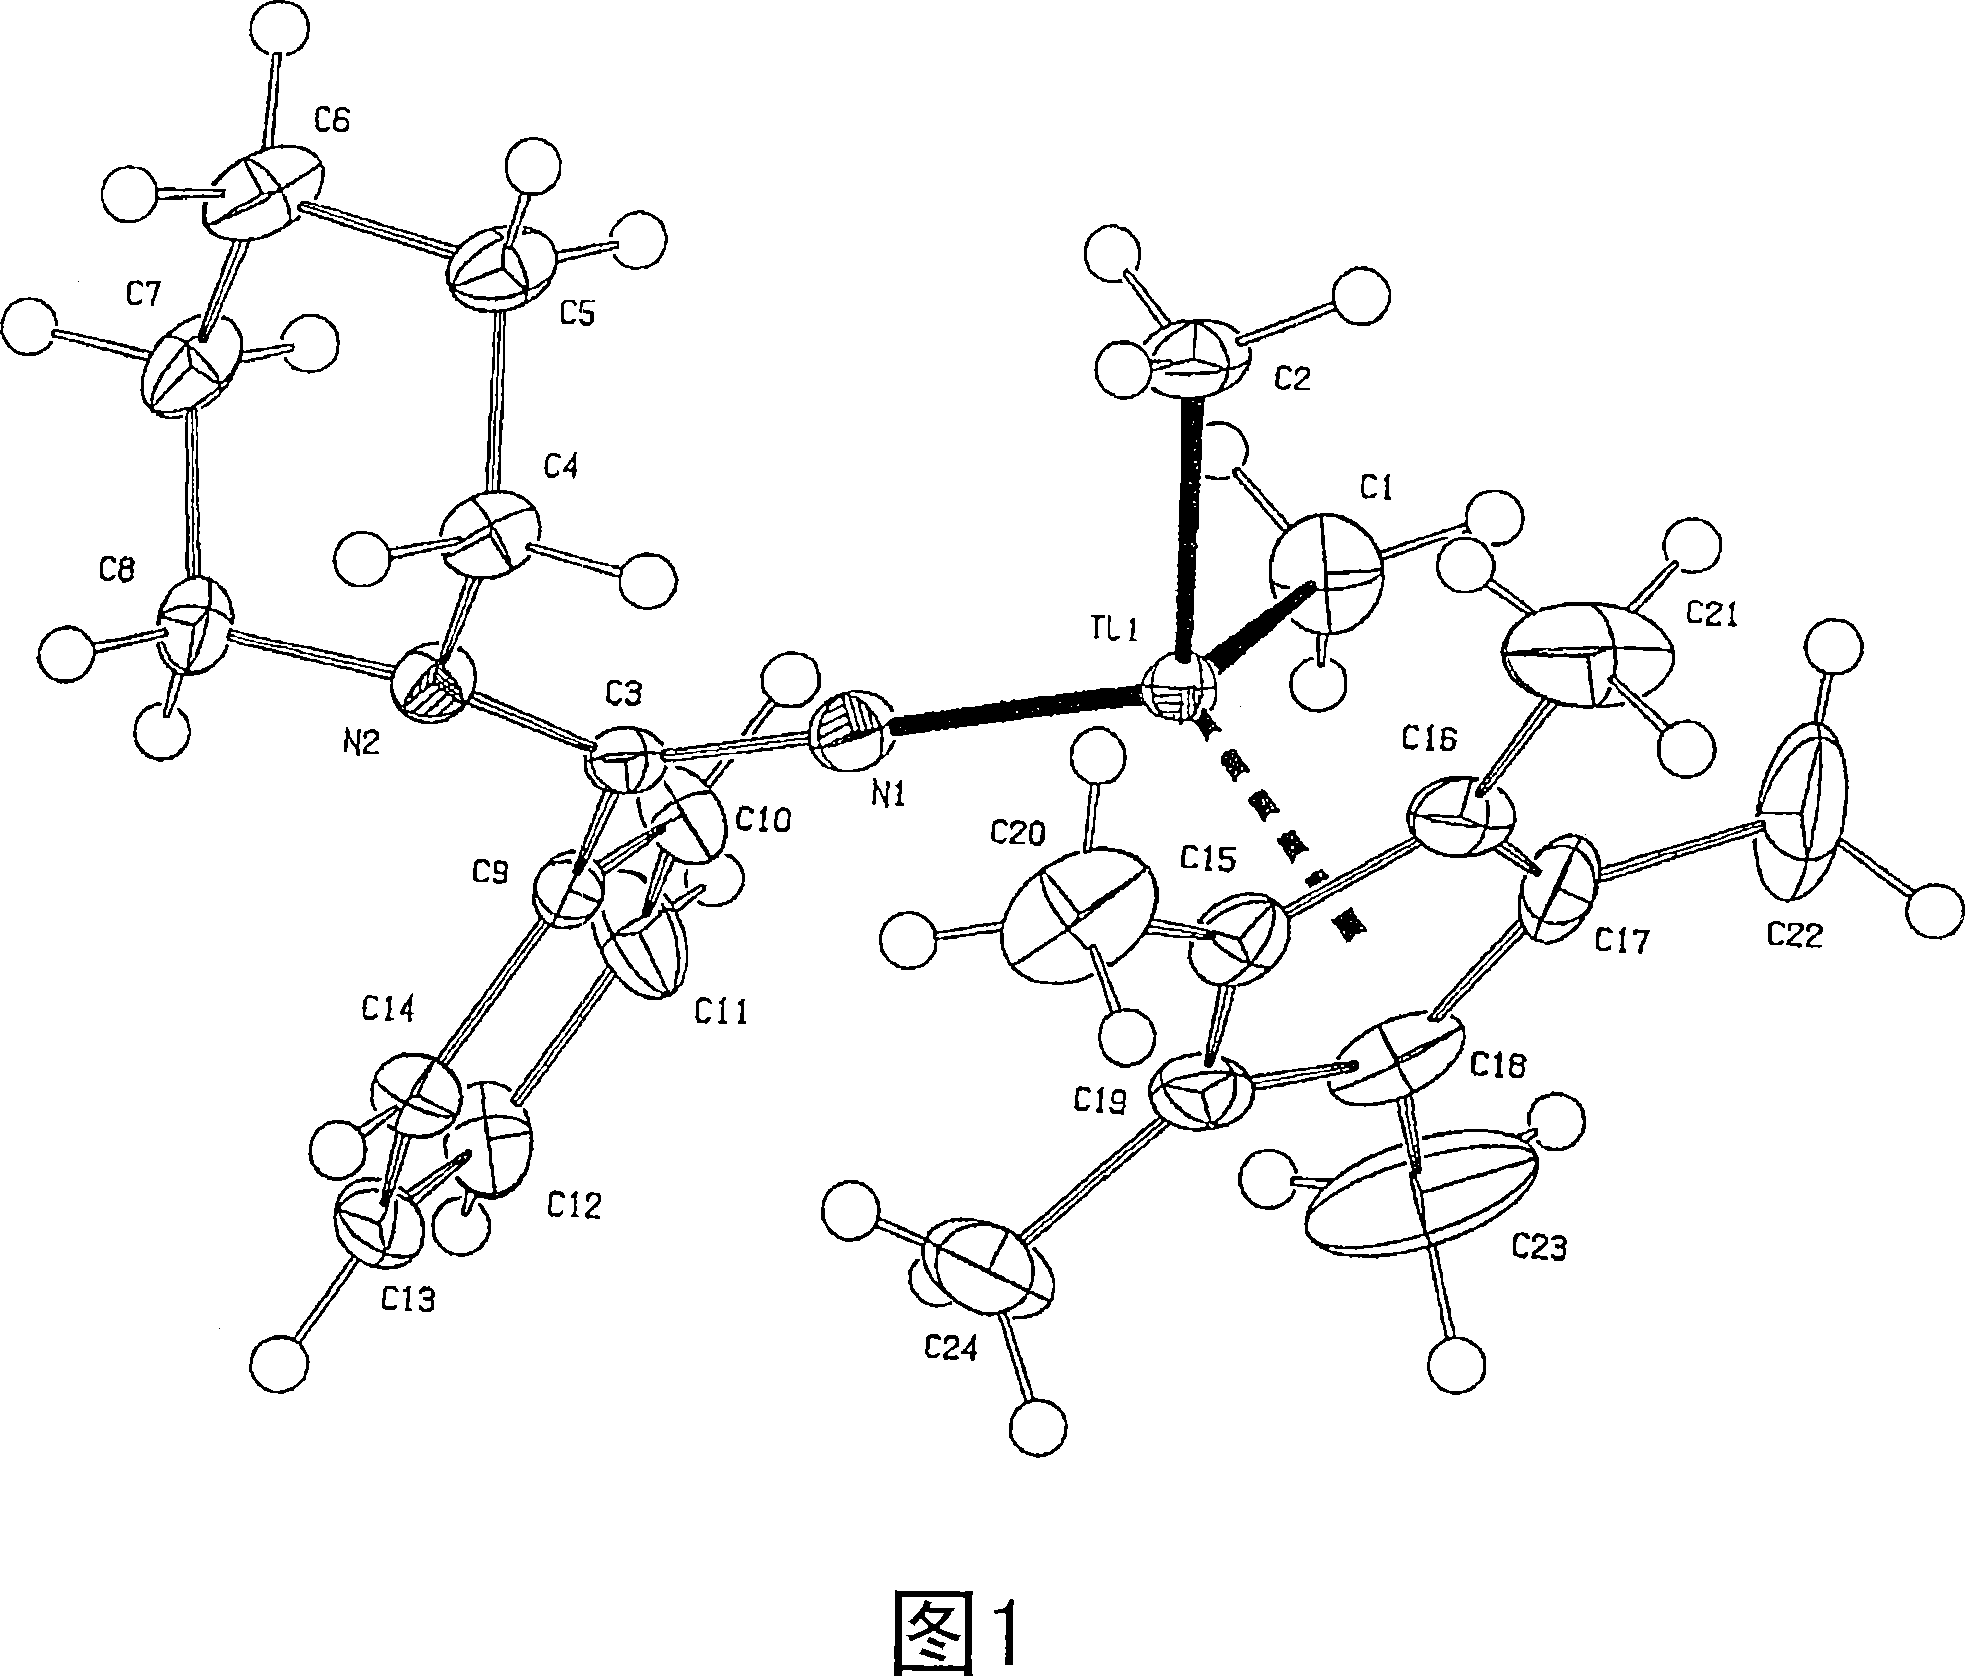 Polimerization catalyst comprising an amidine ligand